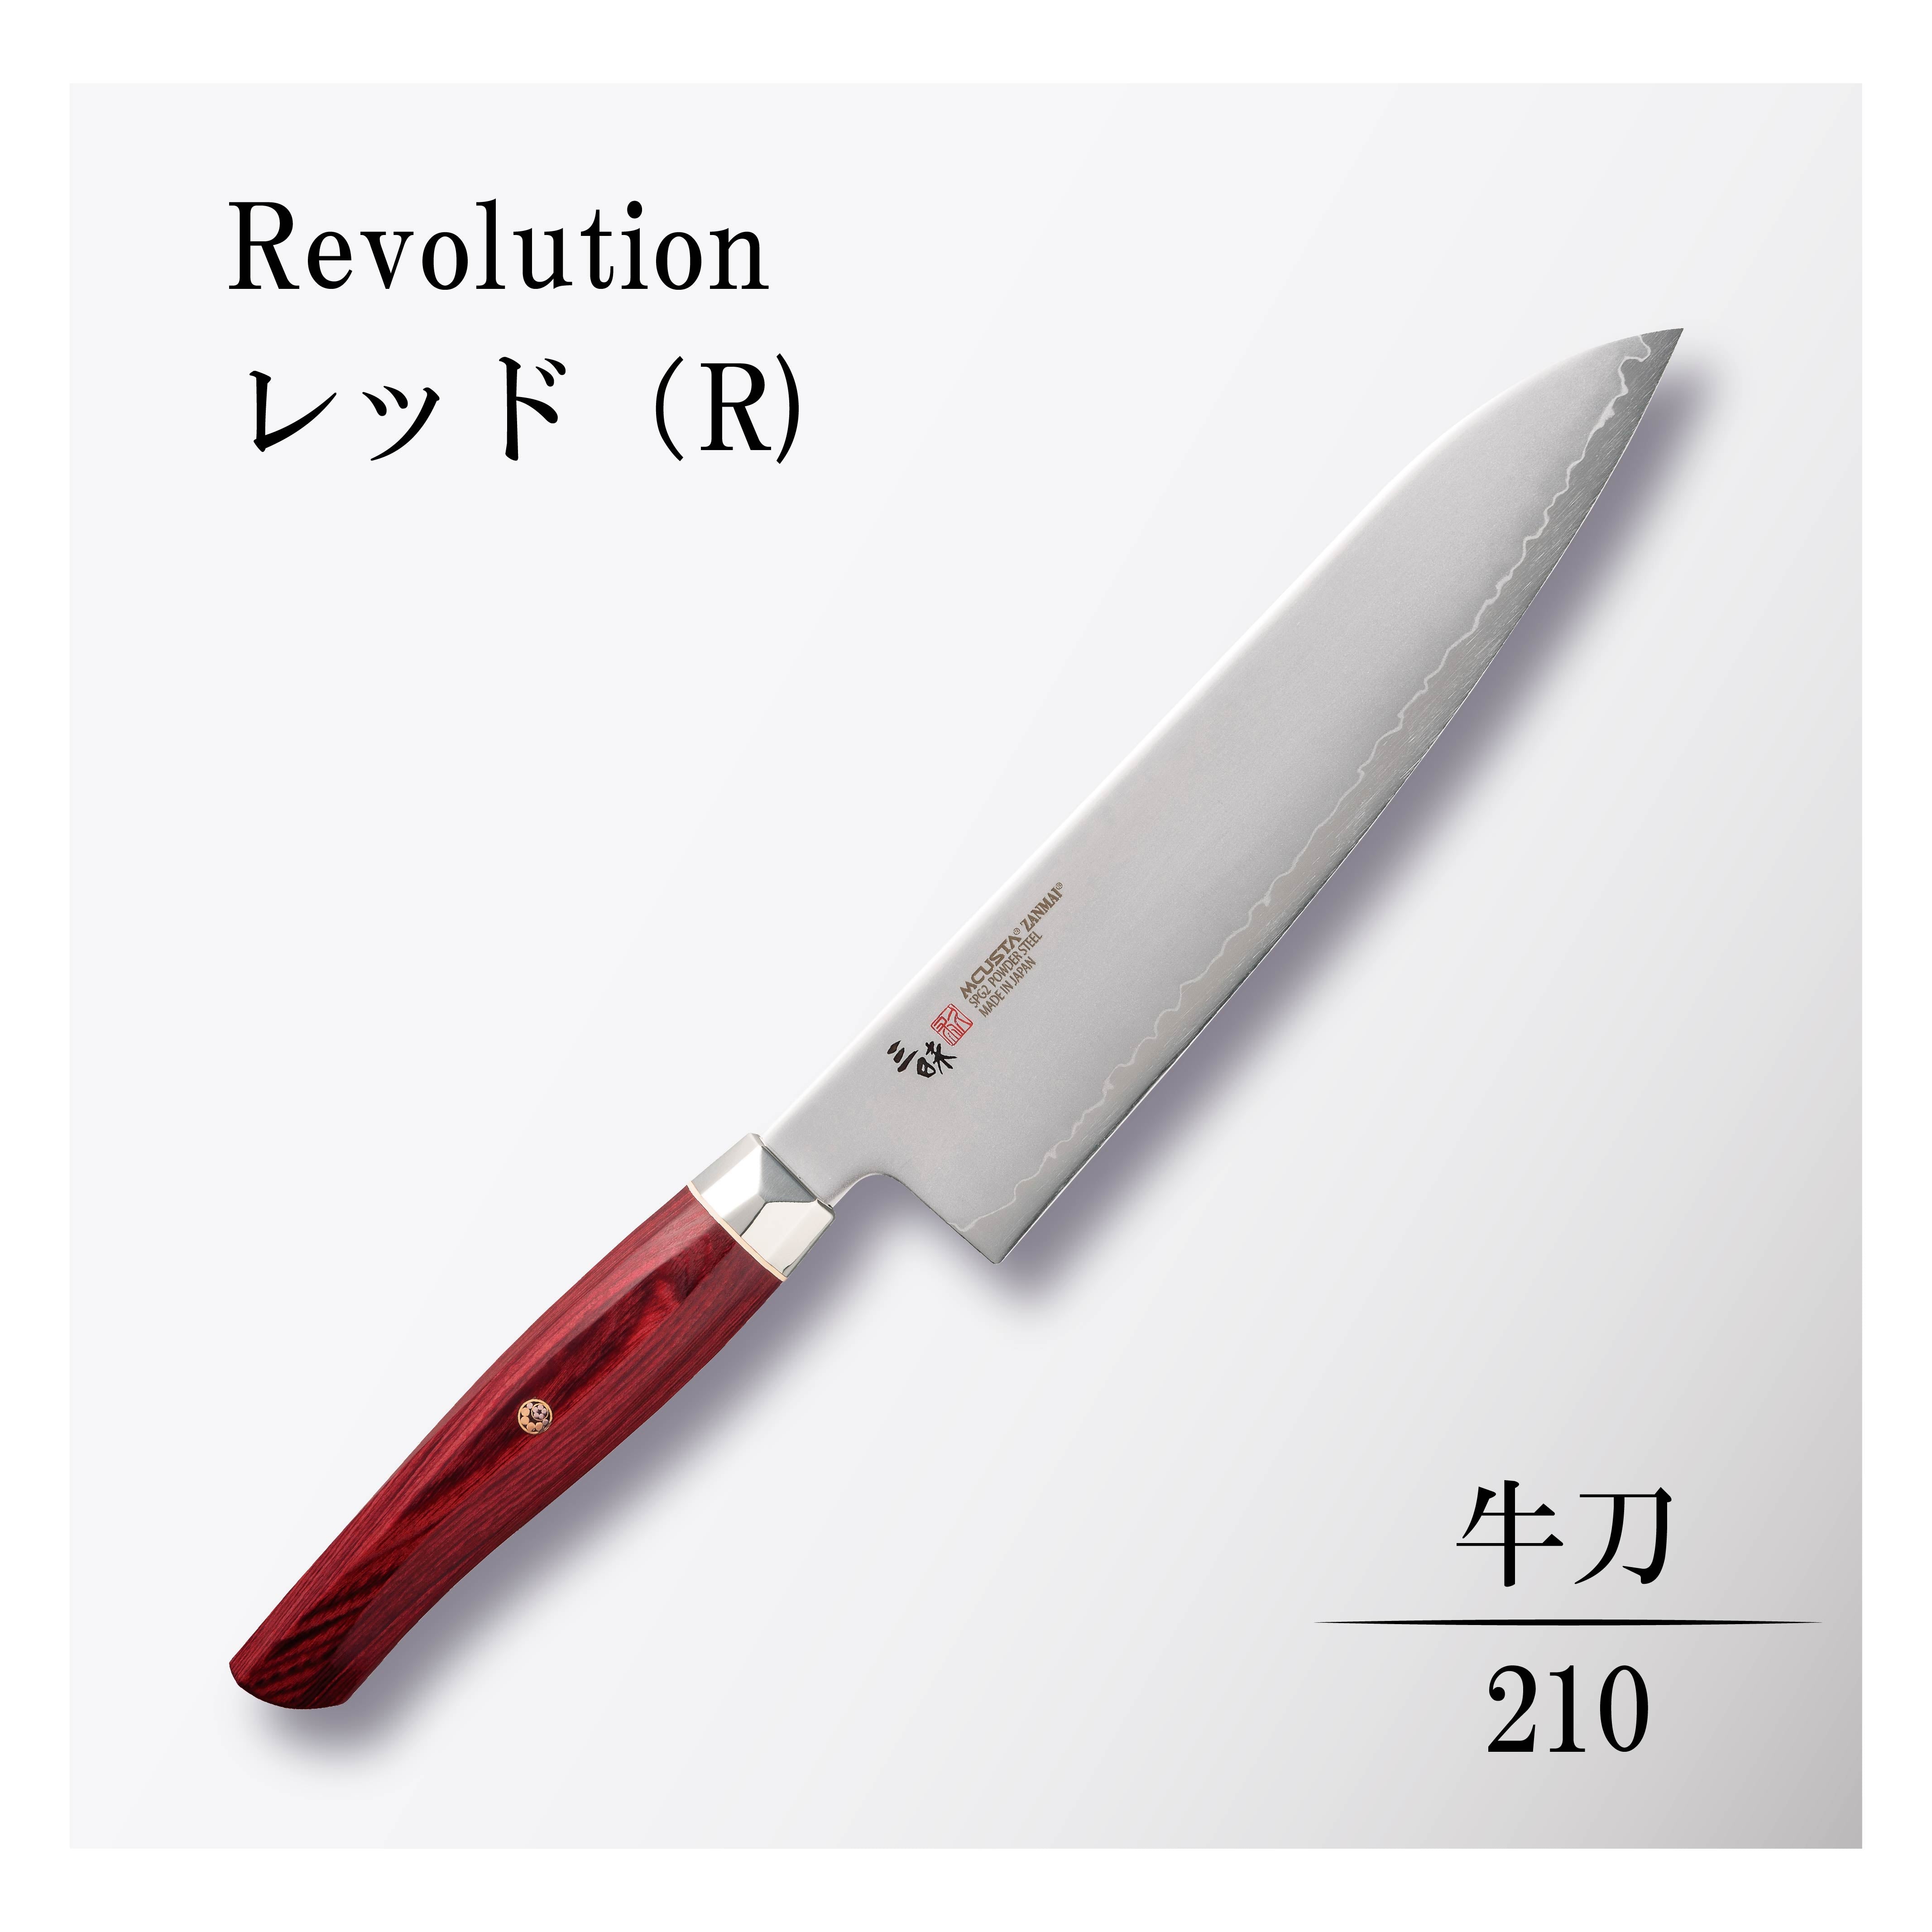 【新品未使用】matfer 牛刀L250 made in France29800円